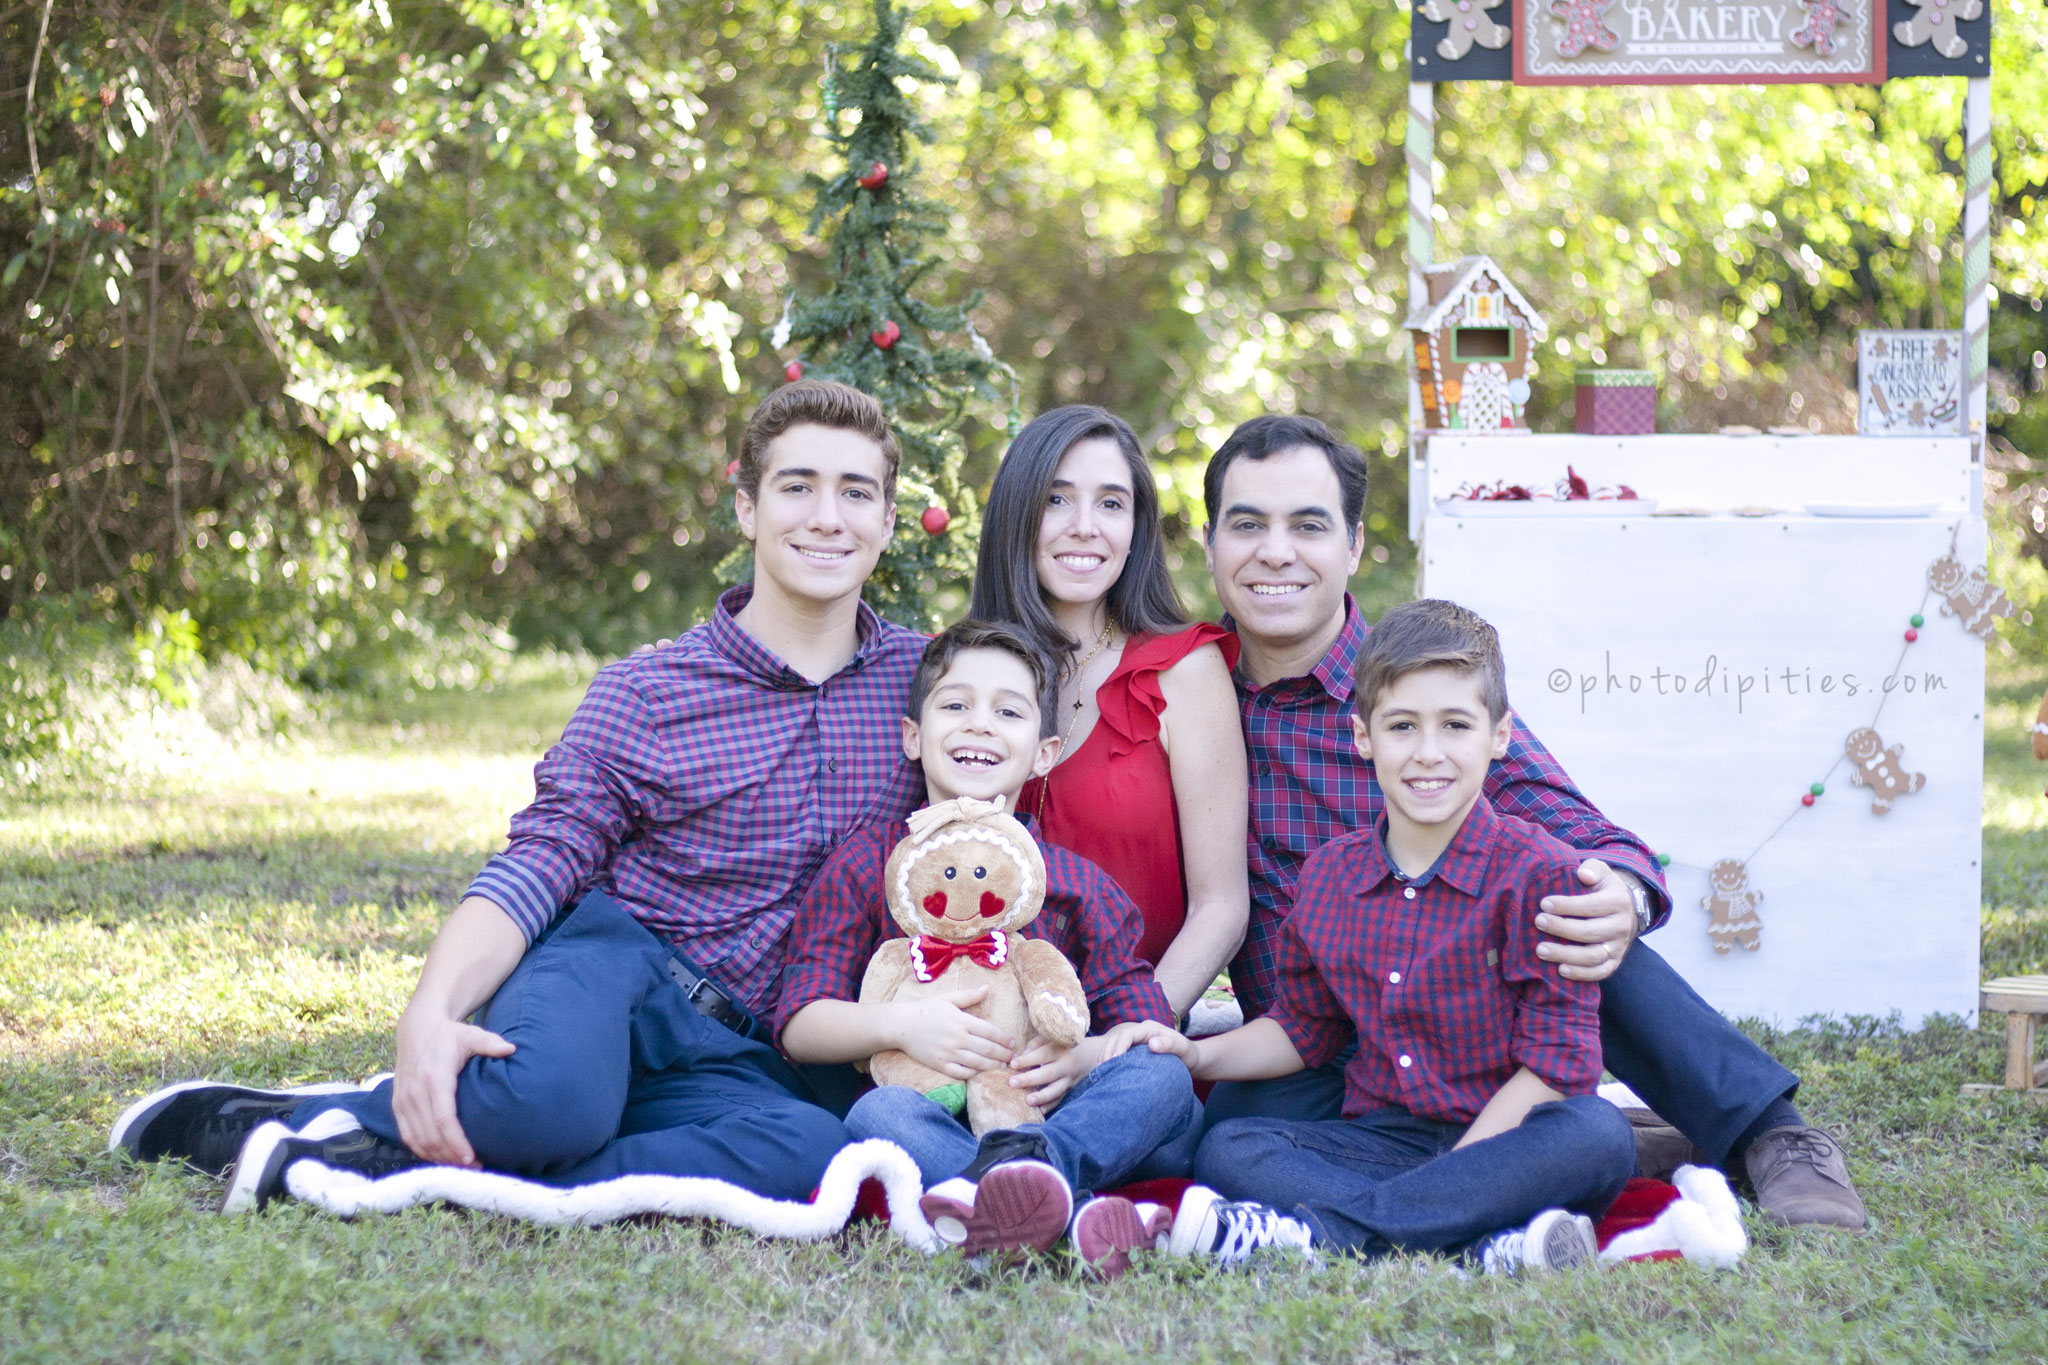 Photodipities Family | Christmas Family Photography